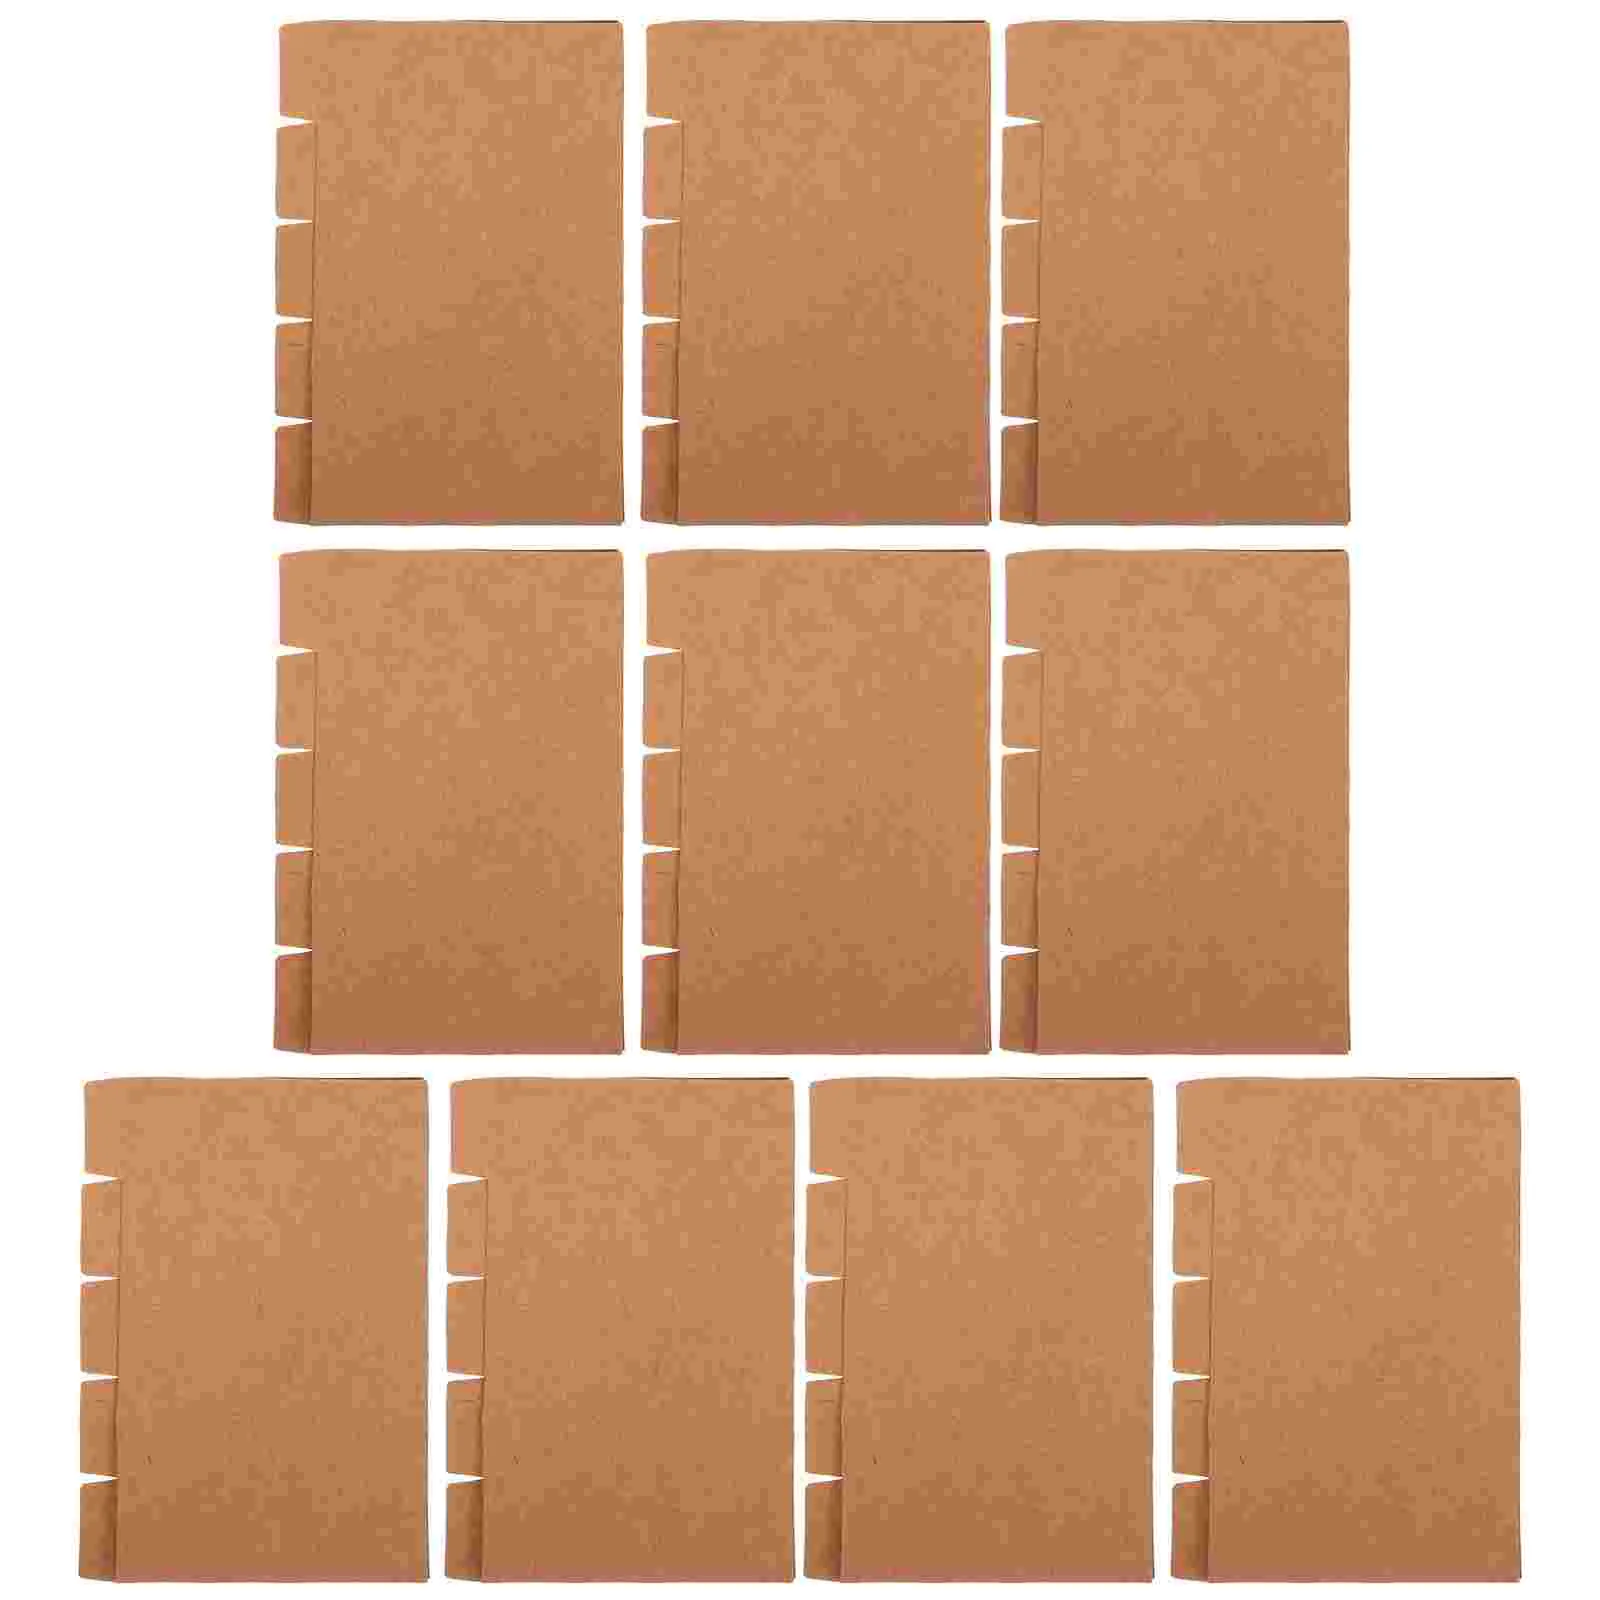  Разделители из крафт-бумаги 3 x 5 дюймов Разделитель индекса Разделитель из коричневой бумаги Разделители Карточки для заметок с вкладками